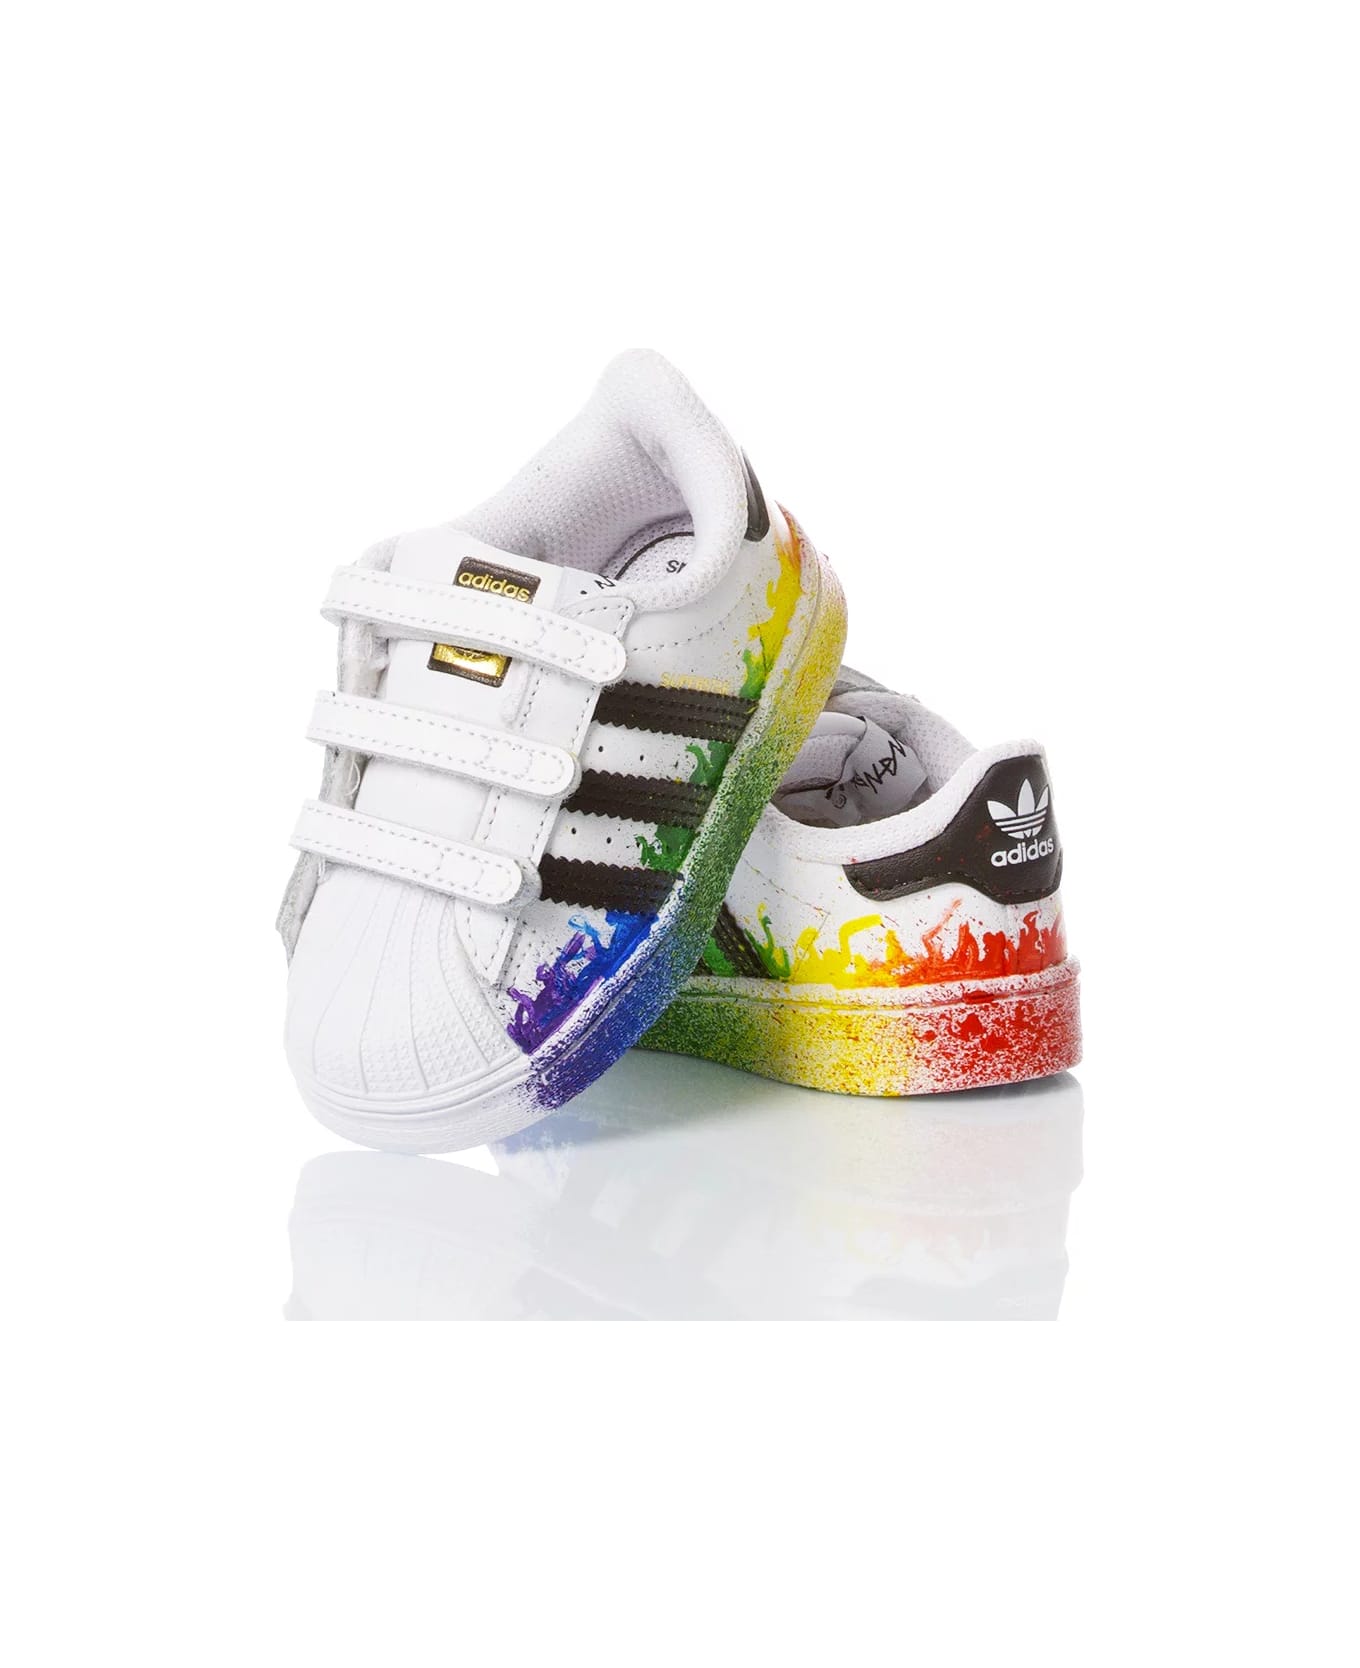 Mimanera Adidas Baby: Customize Your Little Shoe!